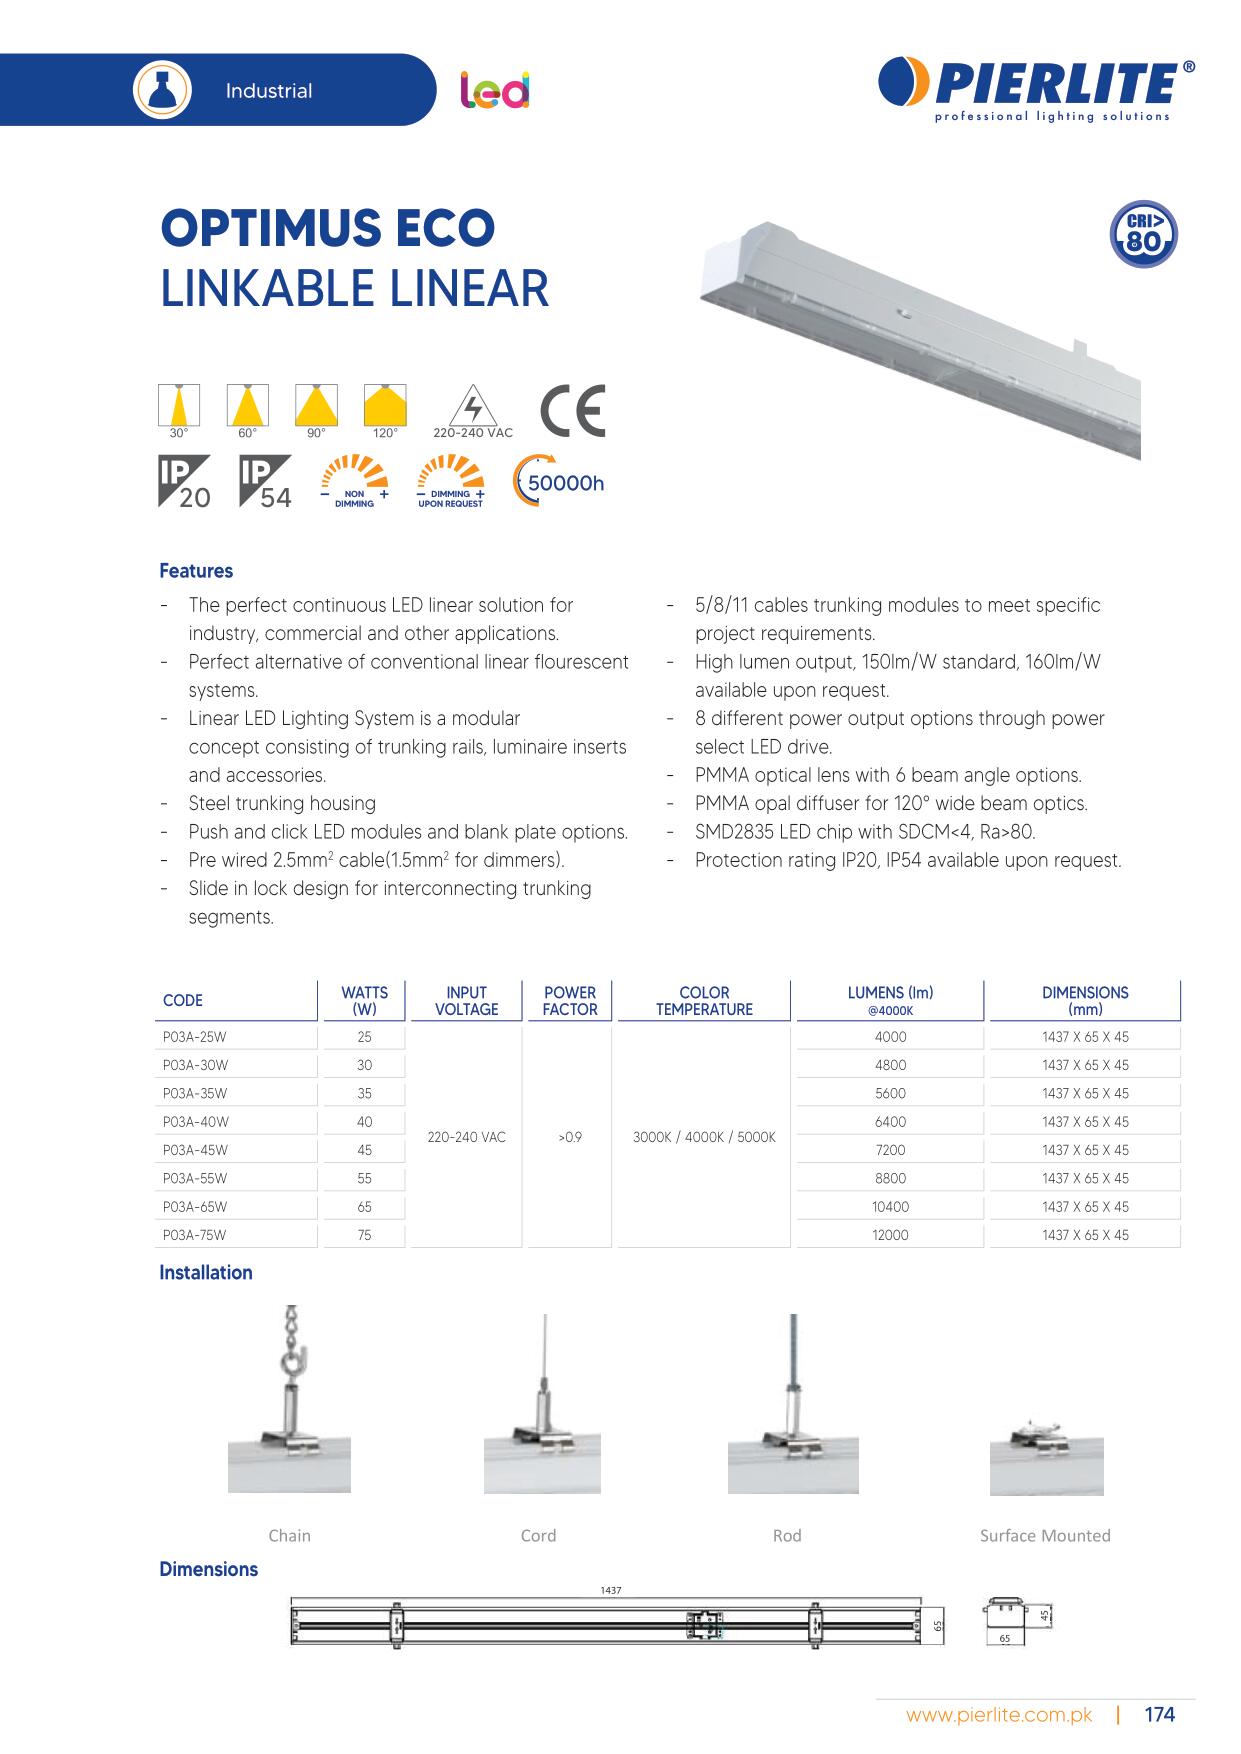 Pierlite LED Luminaire Catalog 2021-183